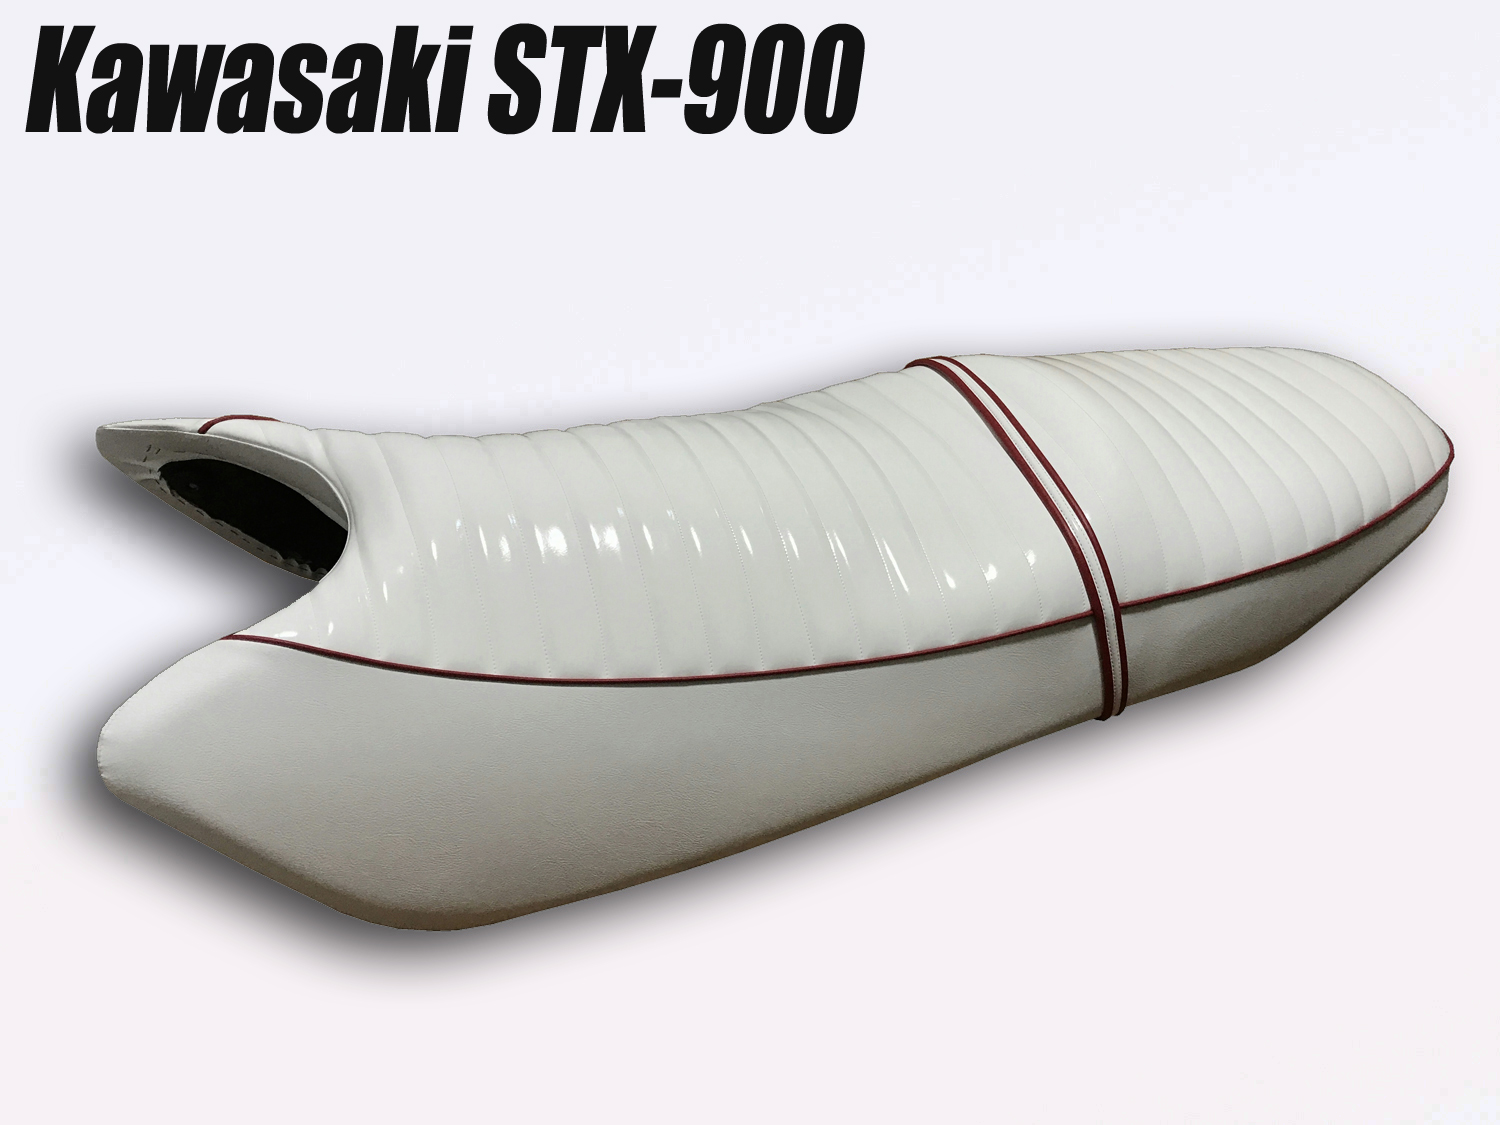 http://customseat.jp/first_website/customblog/reekawasaki-stx-900.jpg